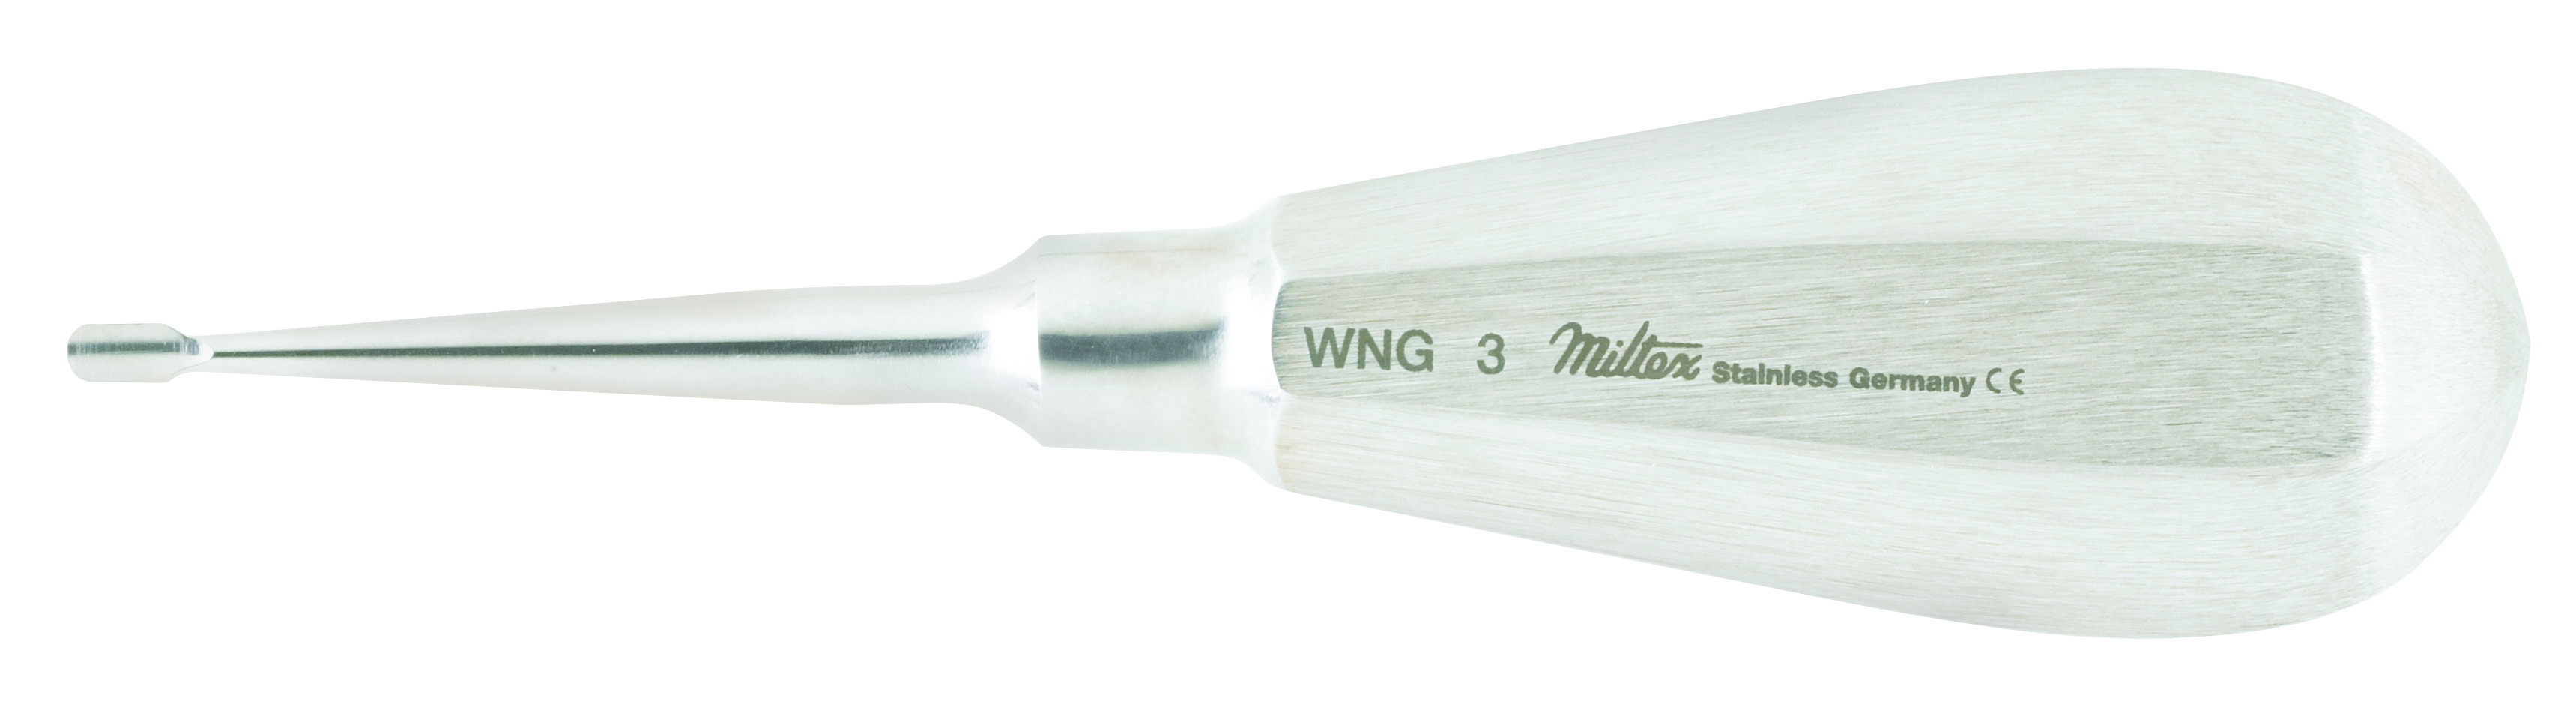 miltex-winged-dental-elevator-size-3mm-delwng3-miltex.jpg